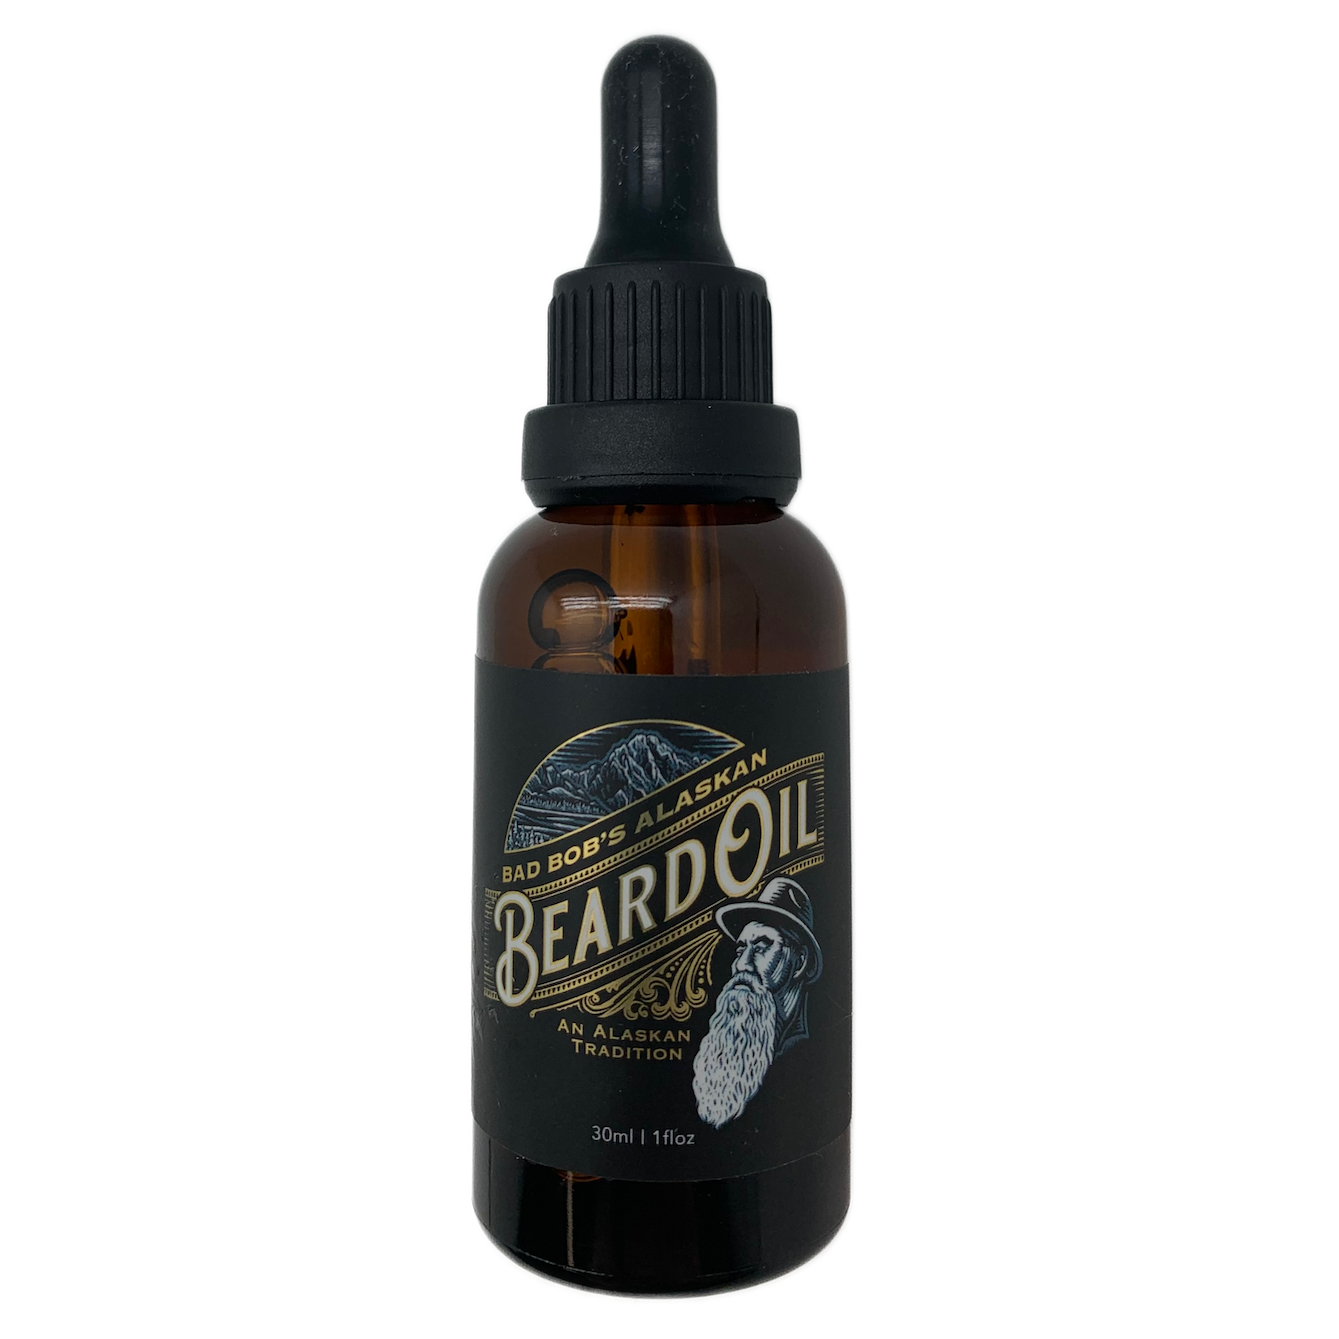 Bad Bob's Alaskan Beard Oil 1 oz